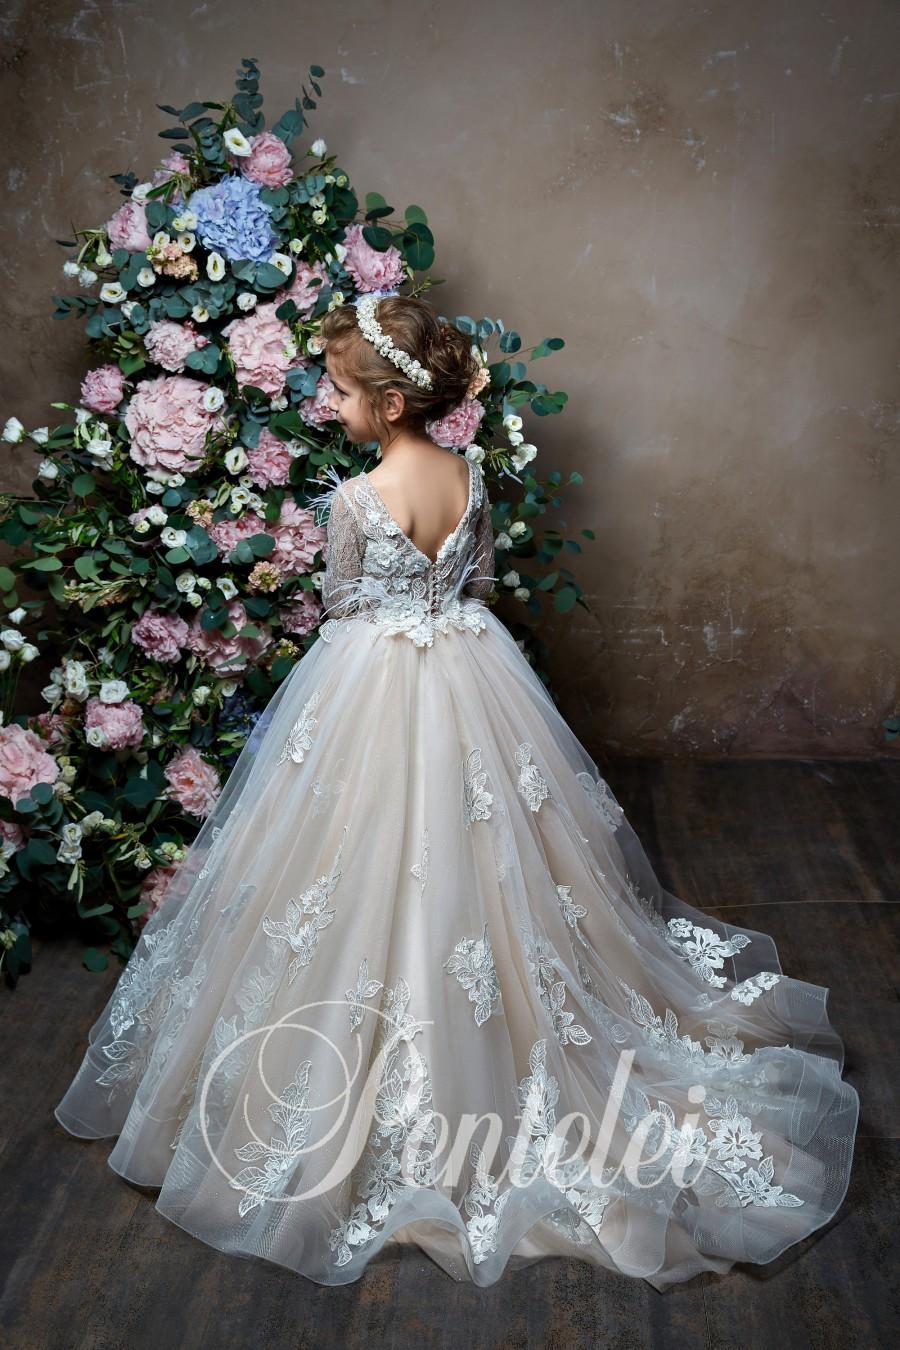 Wedding - Flower girl dress, Rustic Lace Flower Girl Dress,Baby toddler lace dress, white tulle tutu dress,flower girls dresses, birthday, party